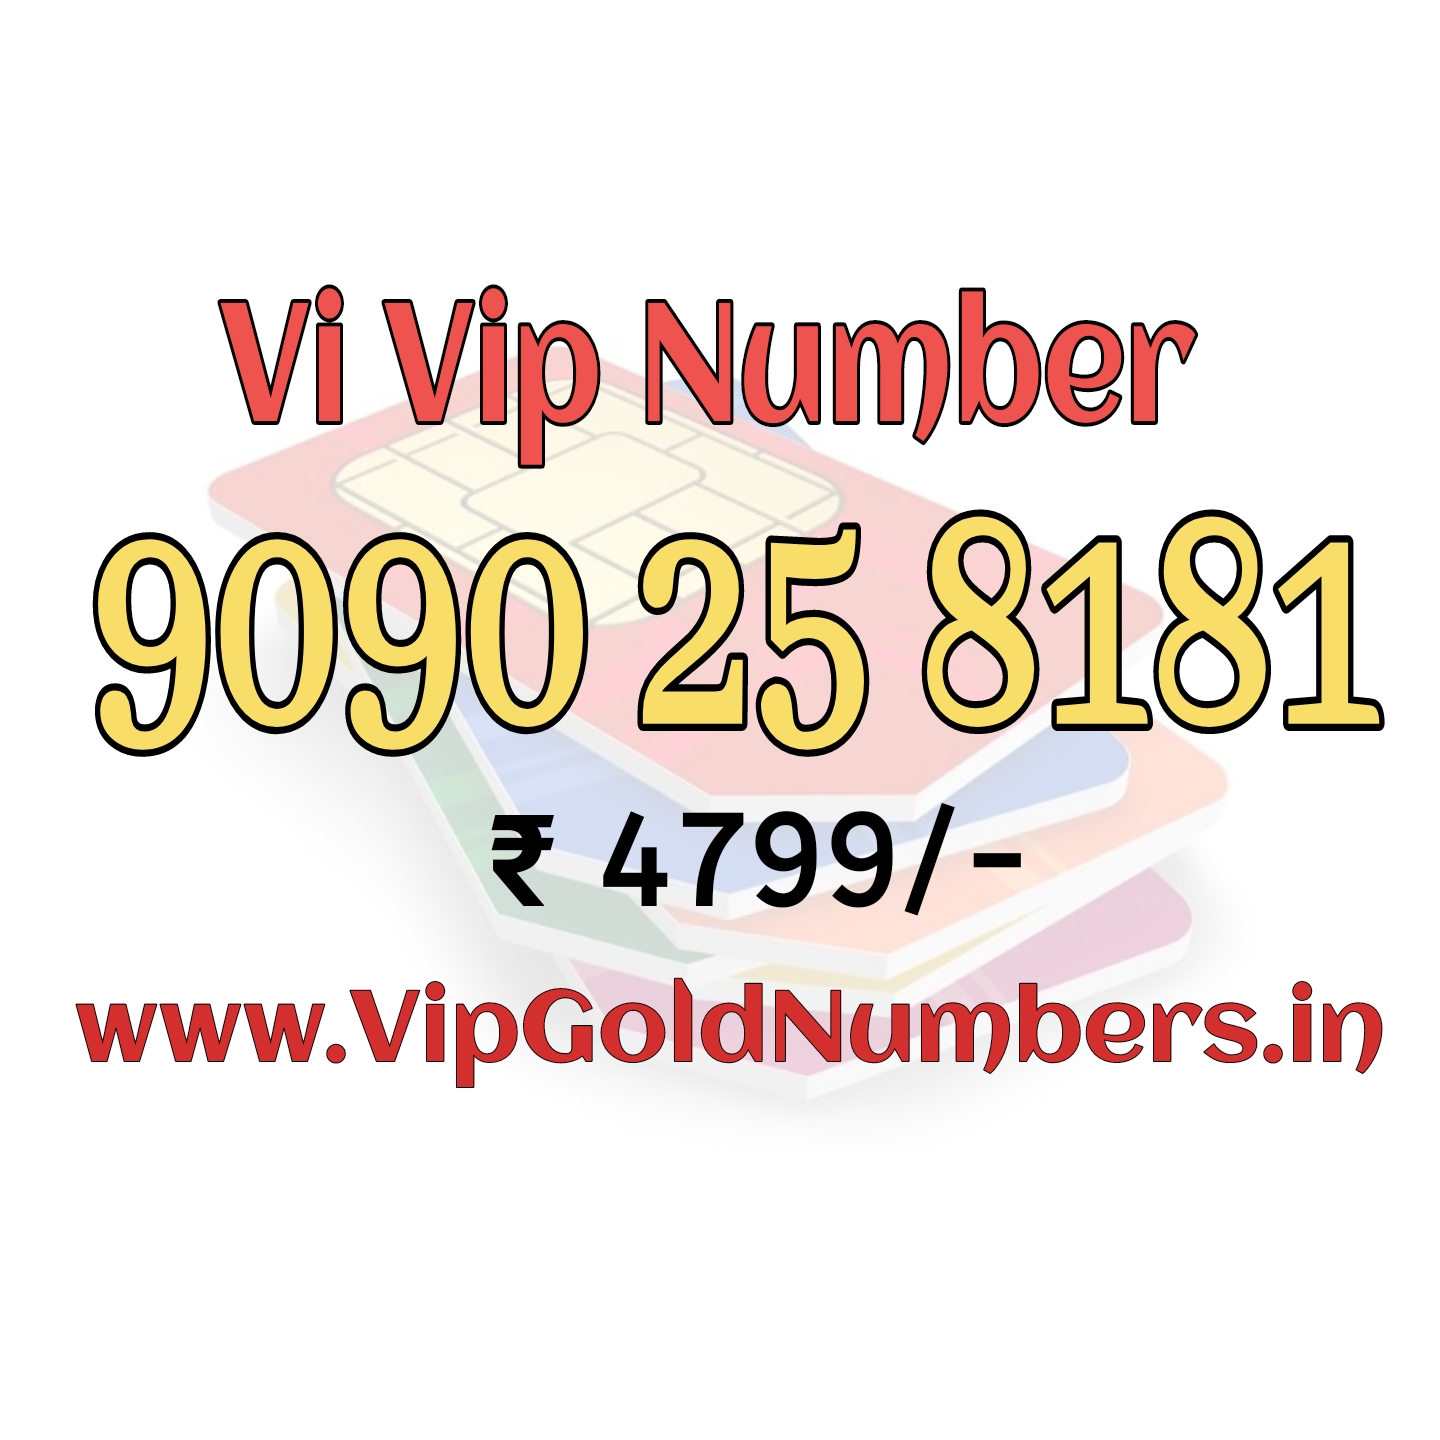 Vi Vip Number